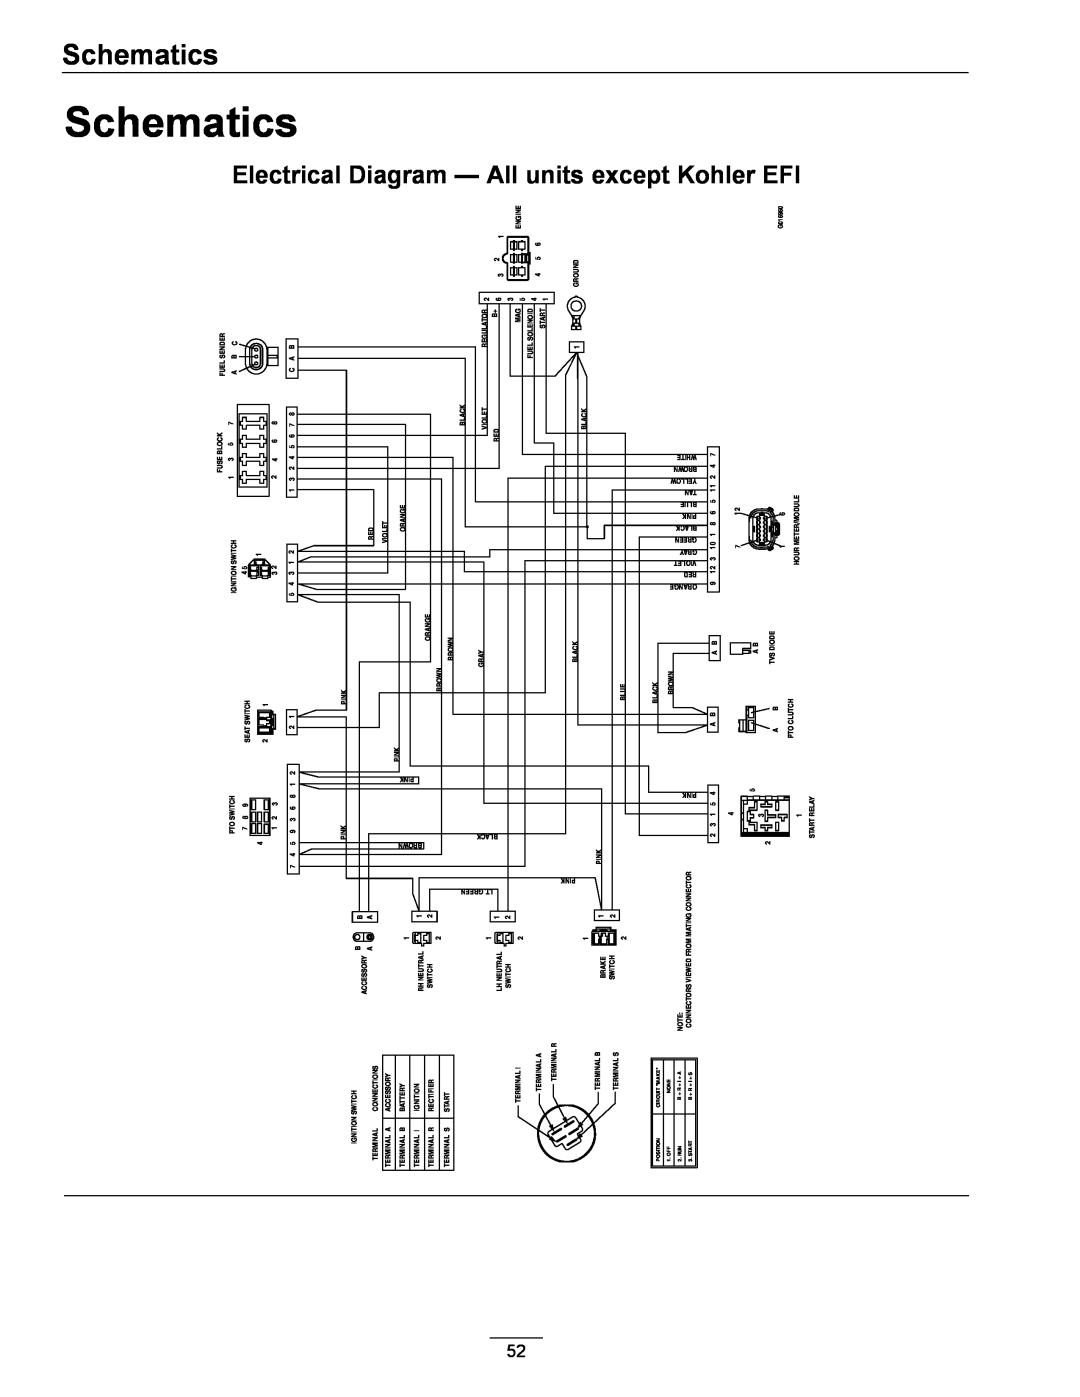 Exmark 312, 000 & higher manual Schematics, Diagram — All units except Kohler EFI, Electrical, Black 